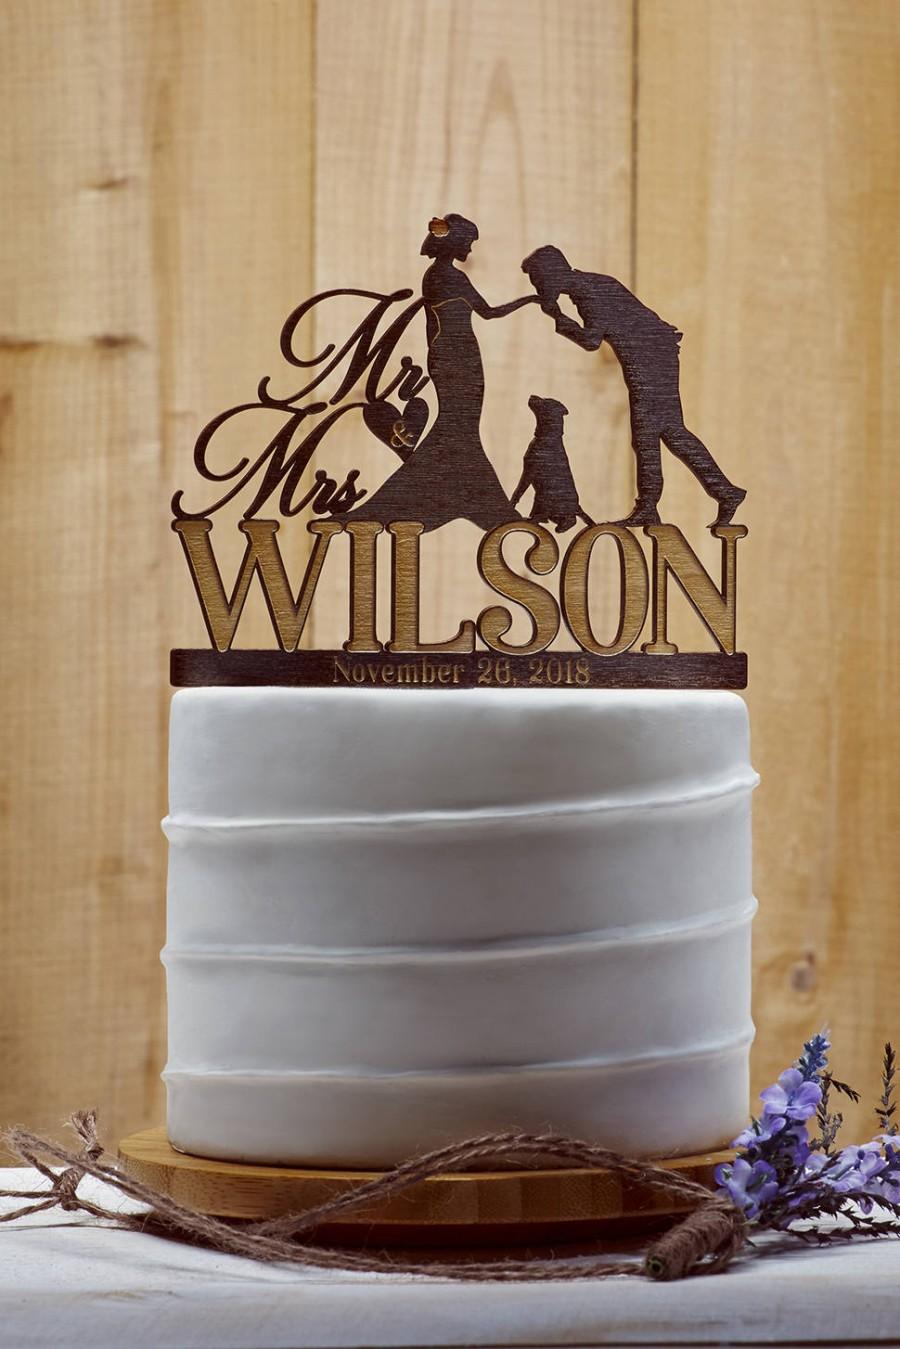 Wedding - Customized Wedding Cake Topper With Dog, Personalized Cake Topper for Wedding, Custom Personalized Wedding Cake Topper, Couple Cake Topper